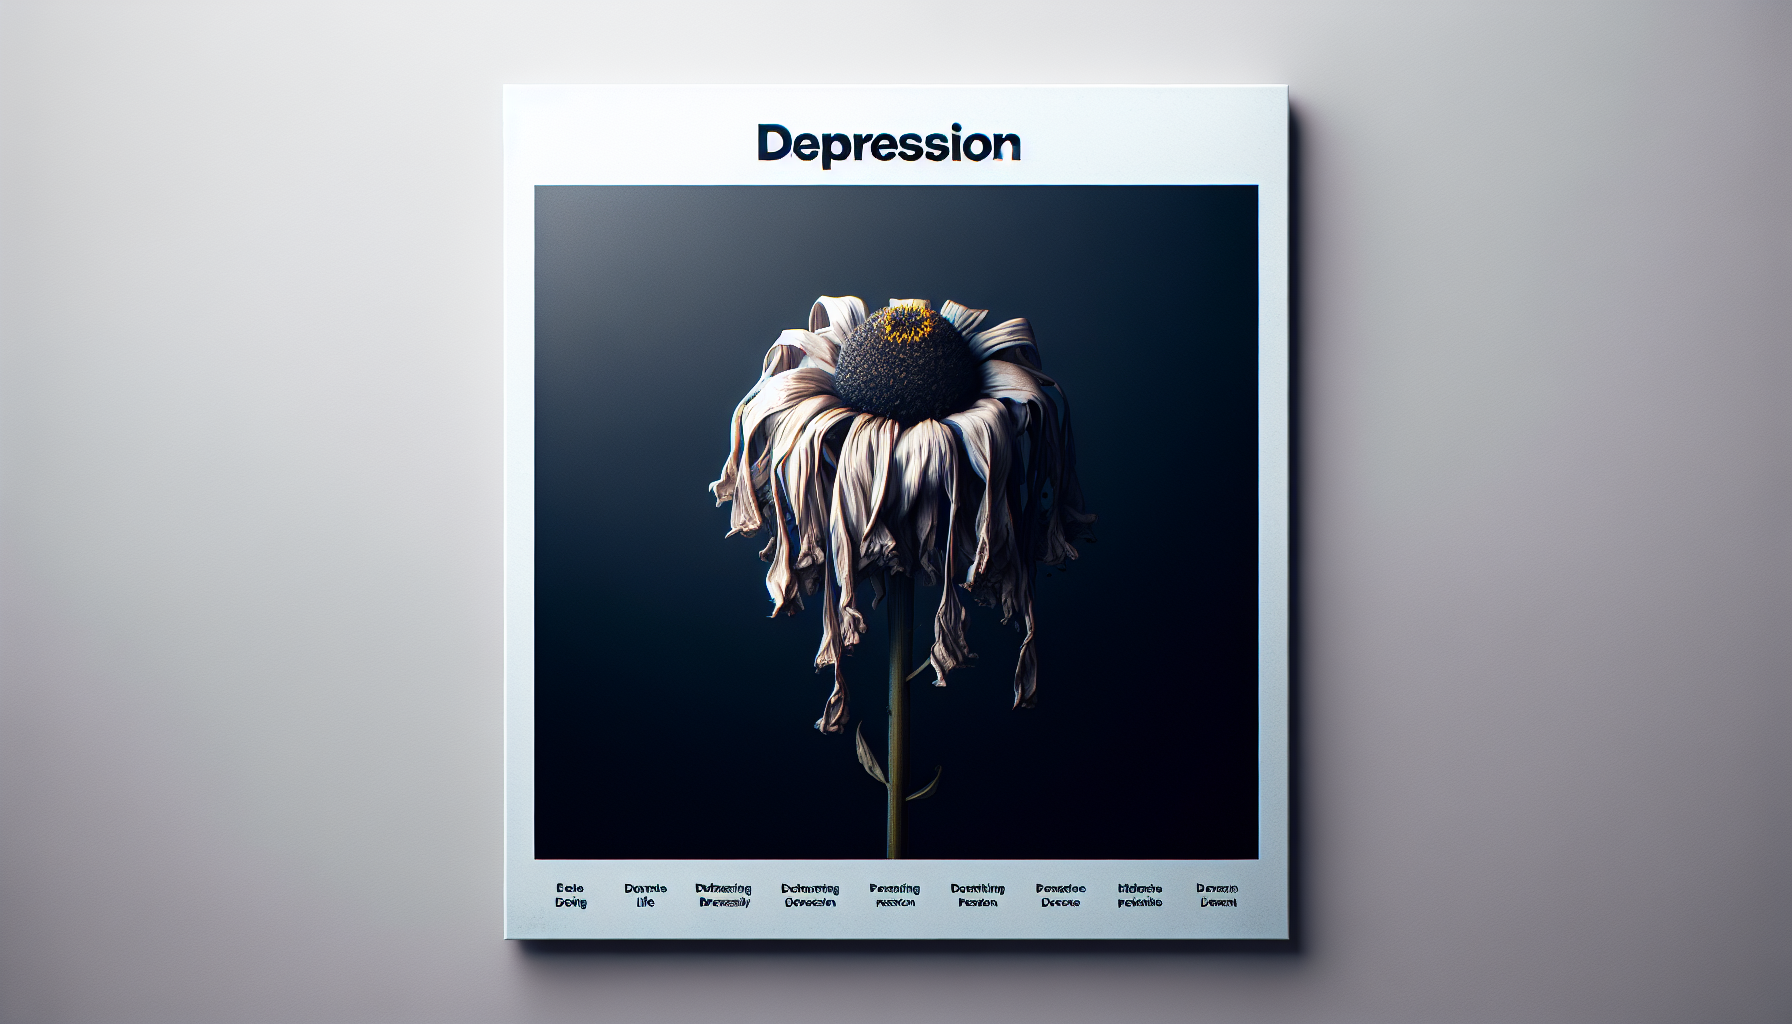 What Life Factors Cause Depression?